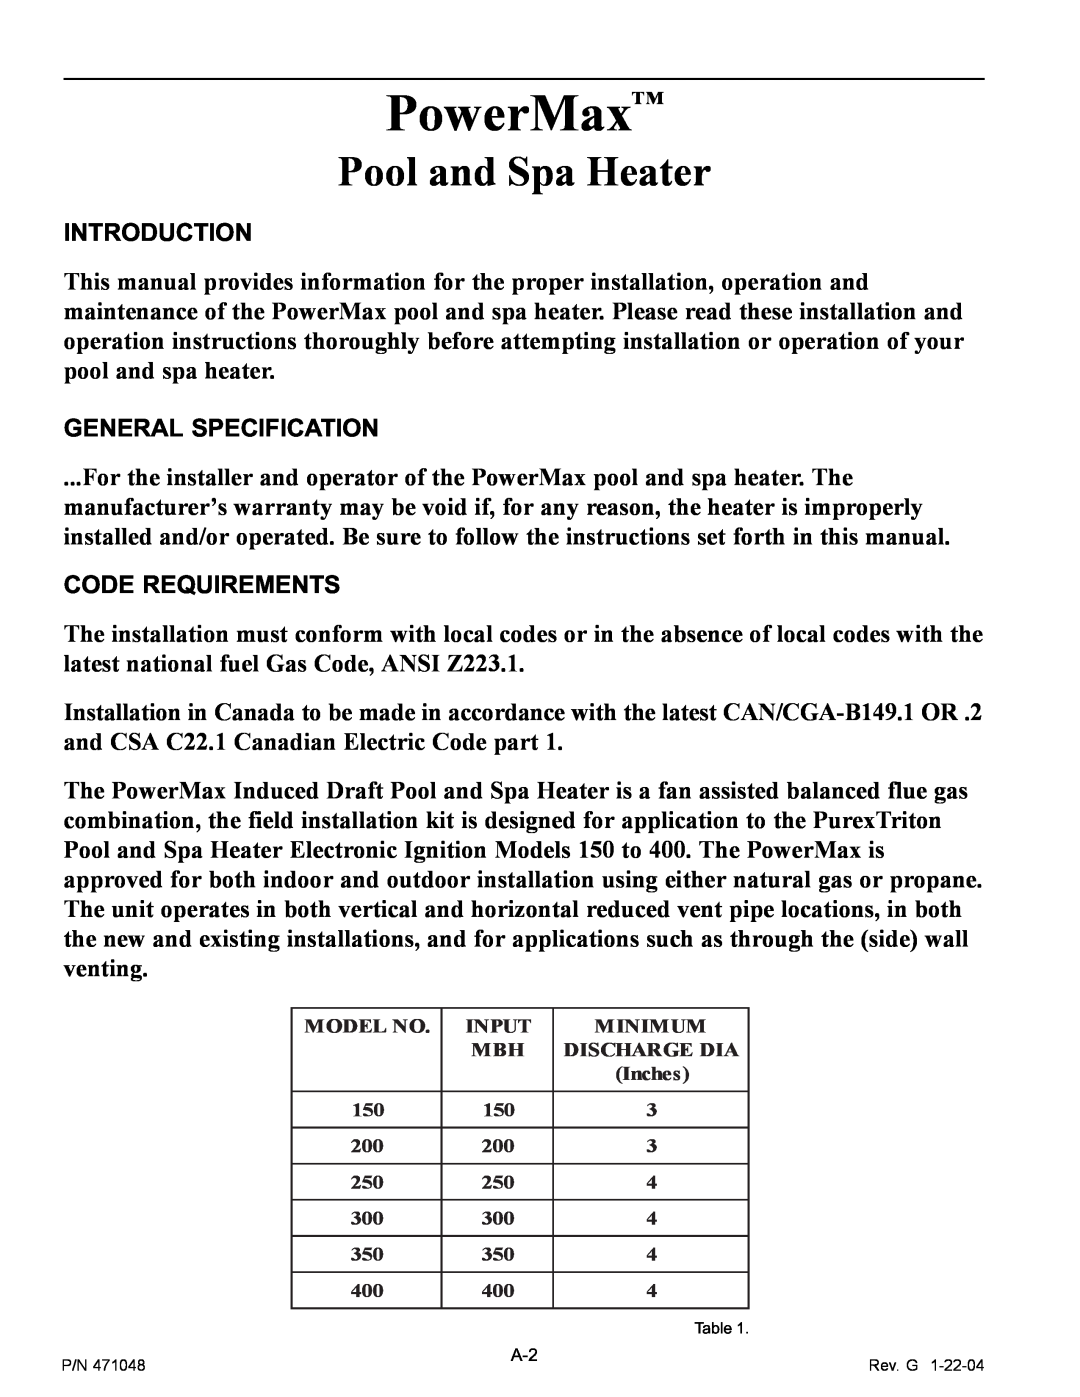 Pentair PowerMax, MiniMax Plus HP Series installation manual Pool and Spa Heater 